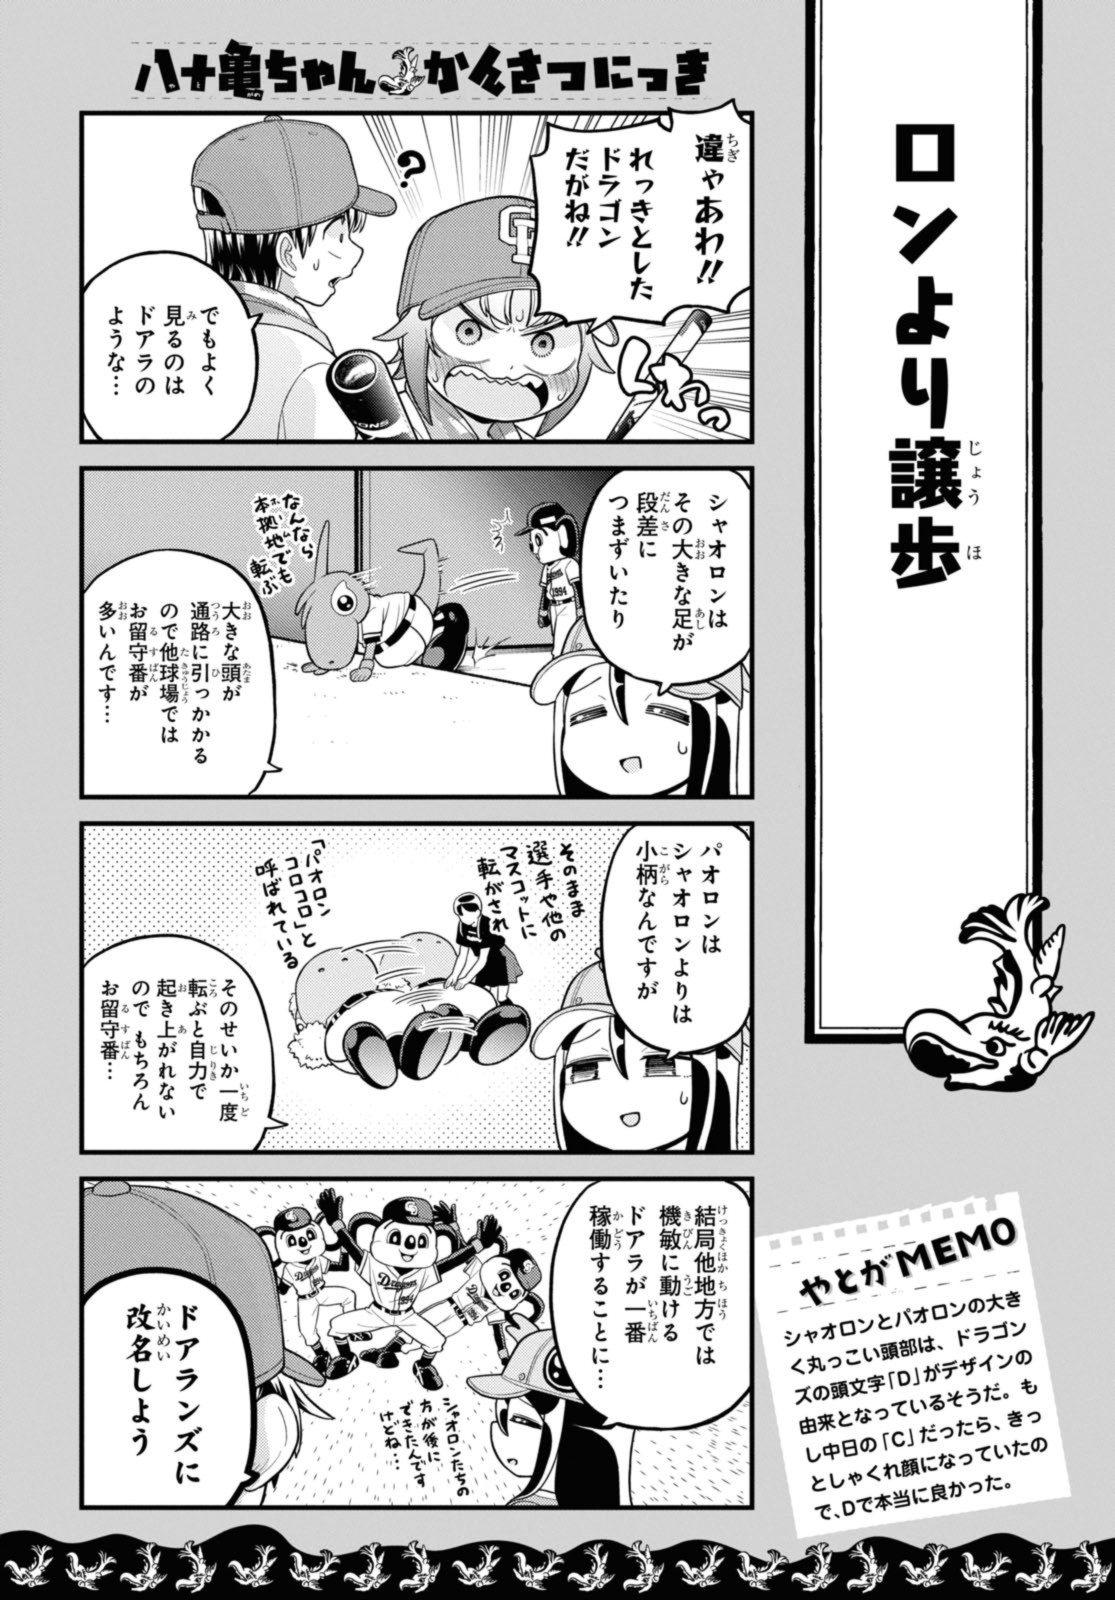 Yatogame-chan Kansatsu Nikki - Chapter 74.2 - Page 3